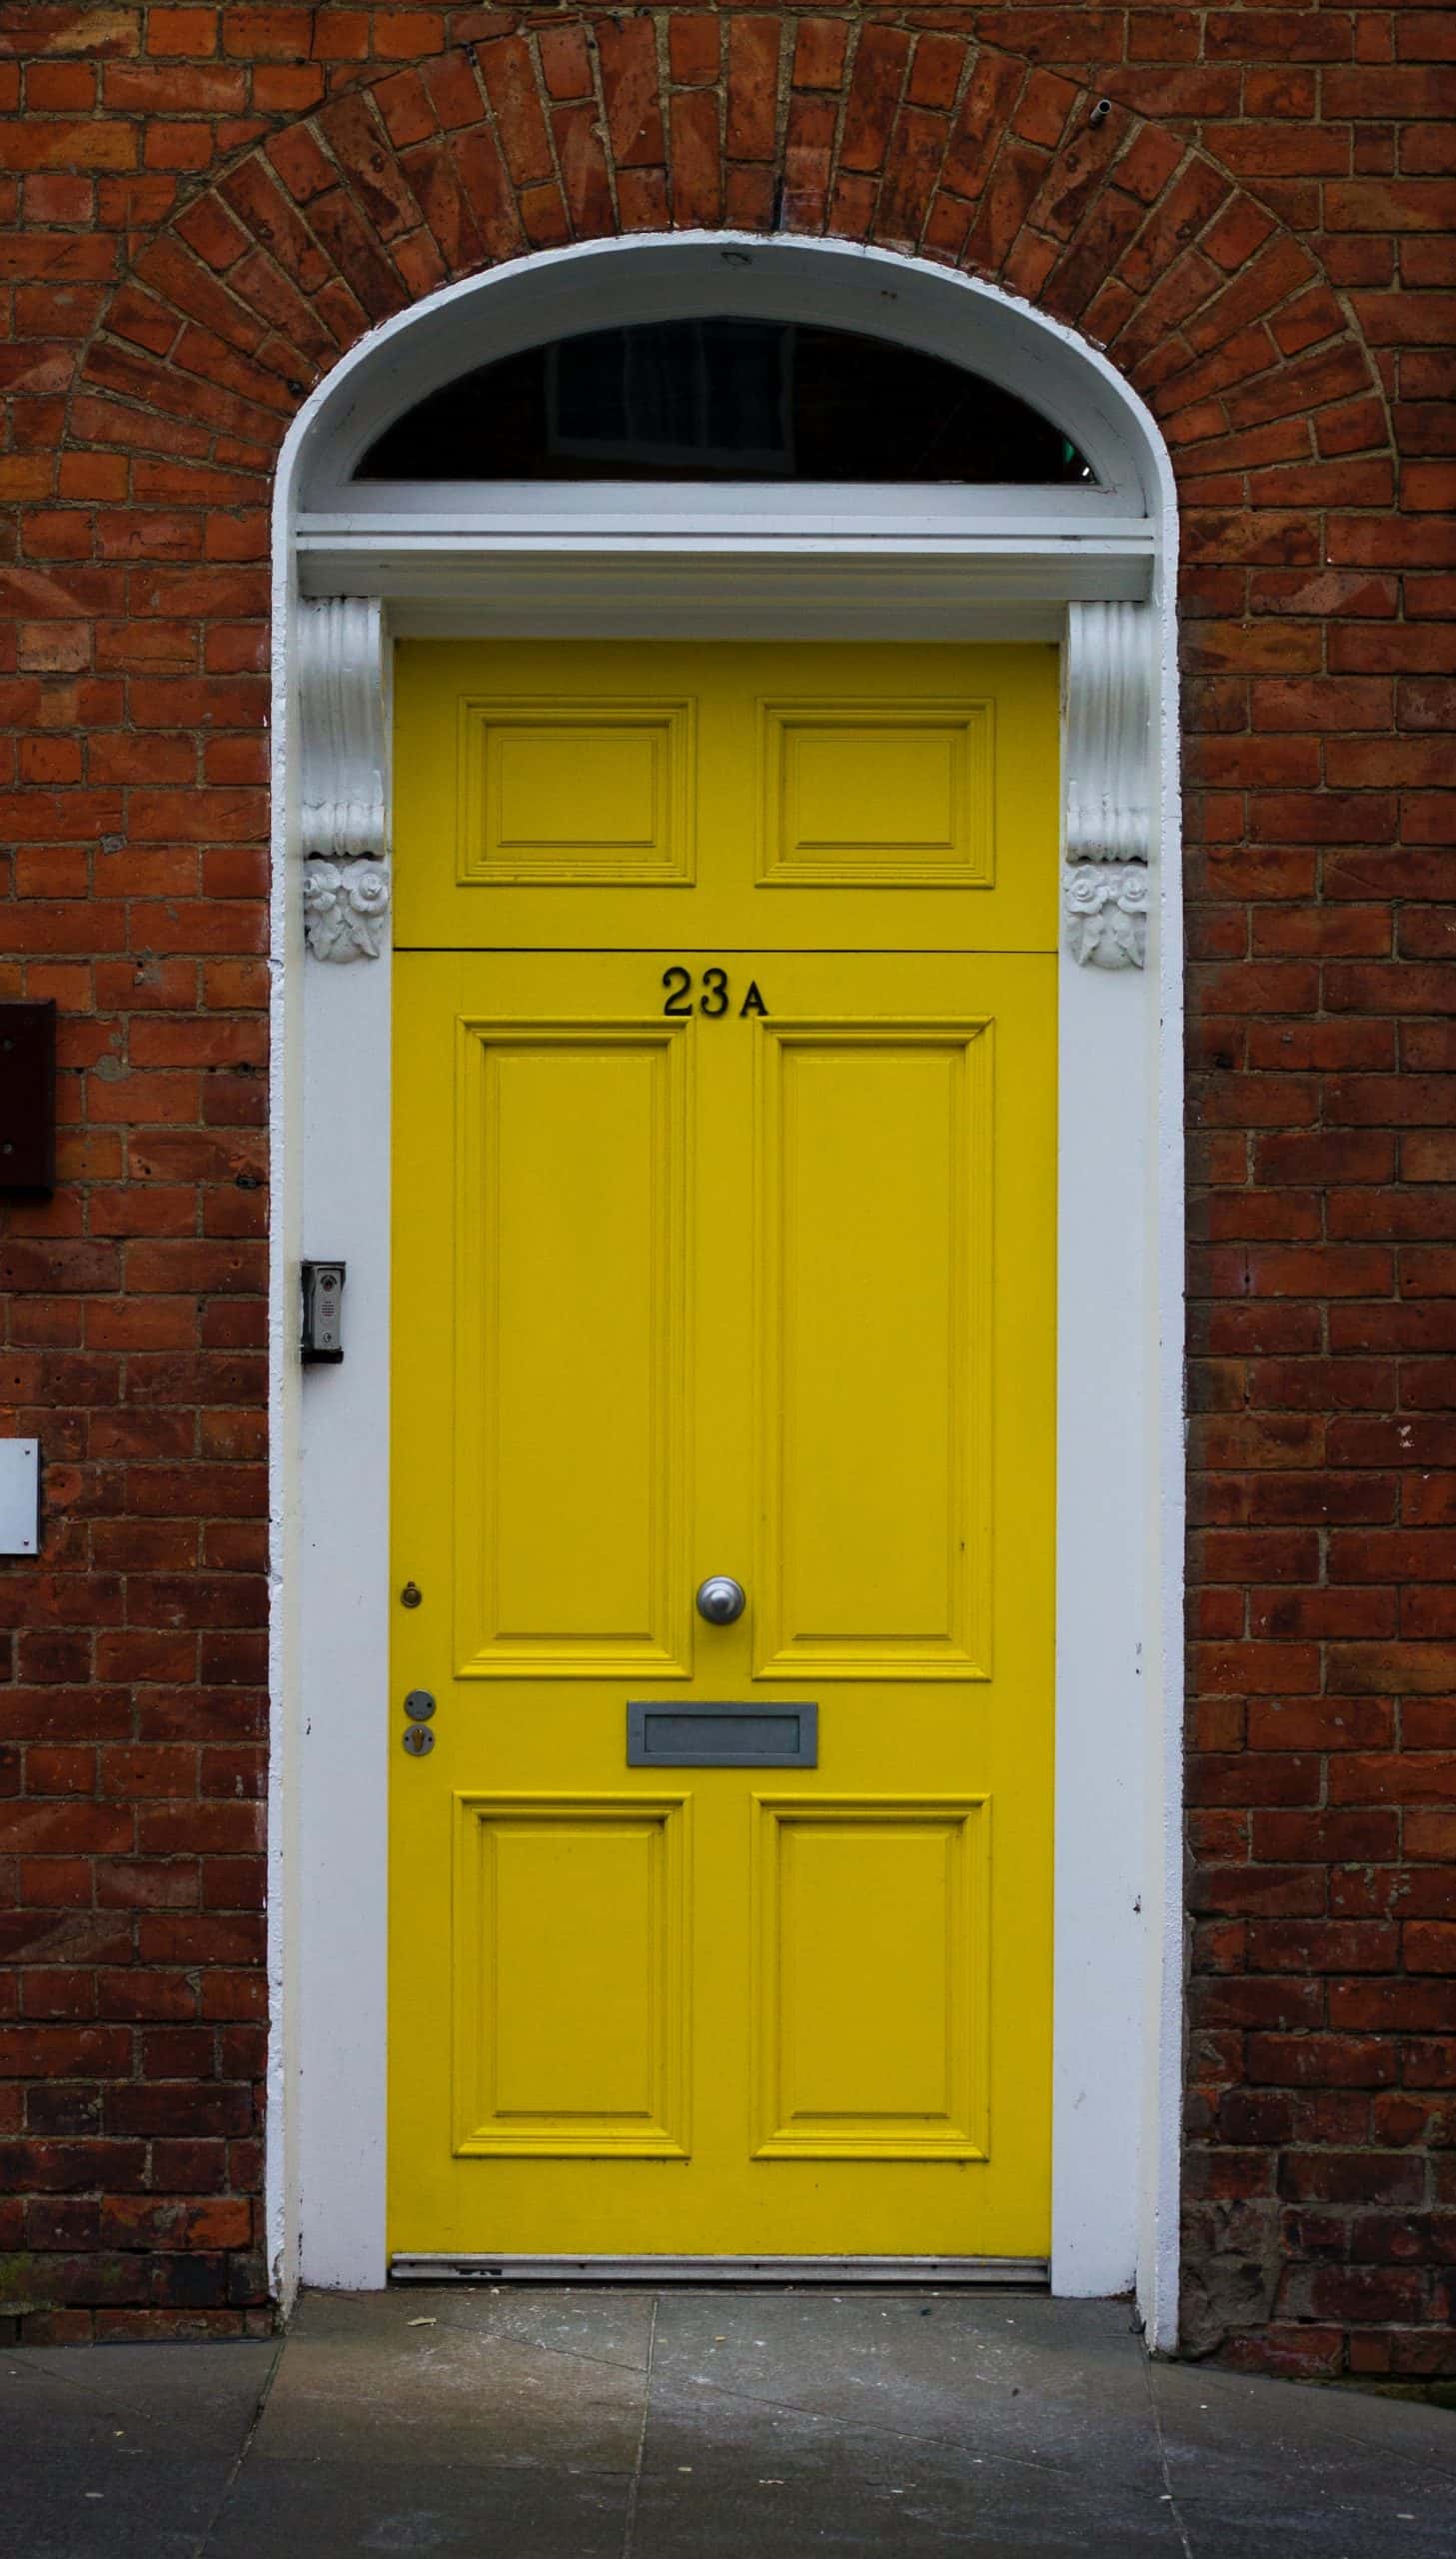 sherlock style rounded door design